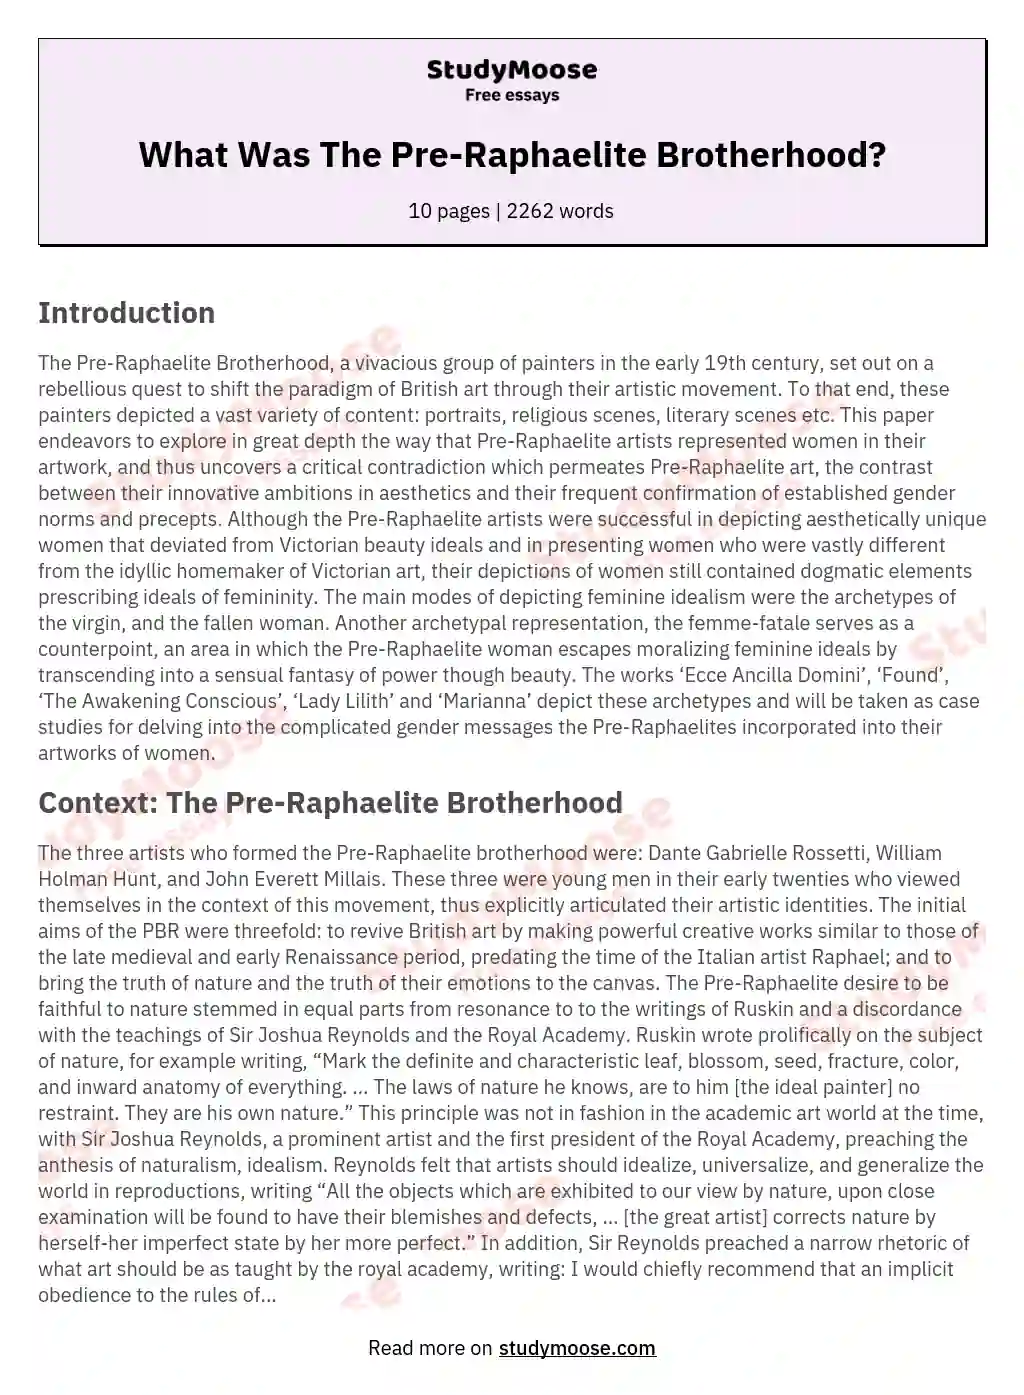 What Was The Pre-Raphaelite Brotherhood? essay